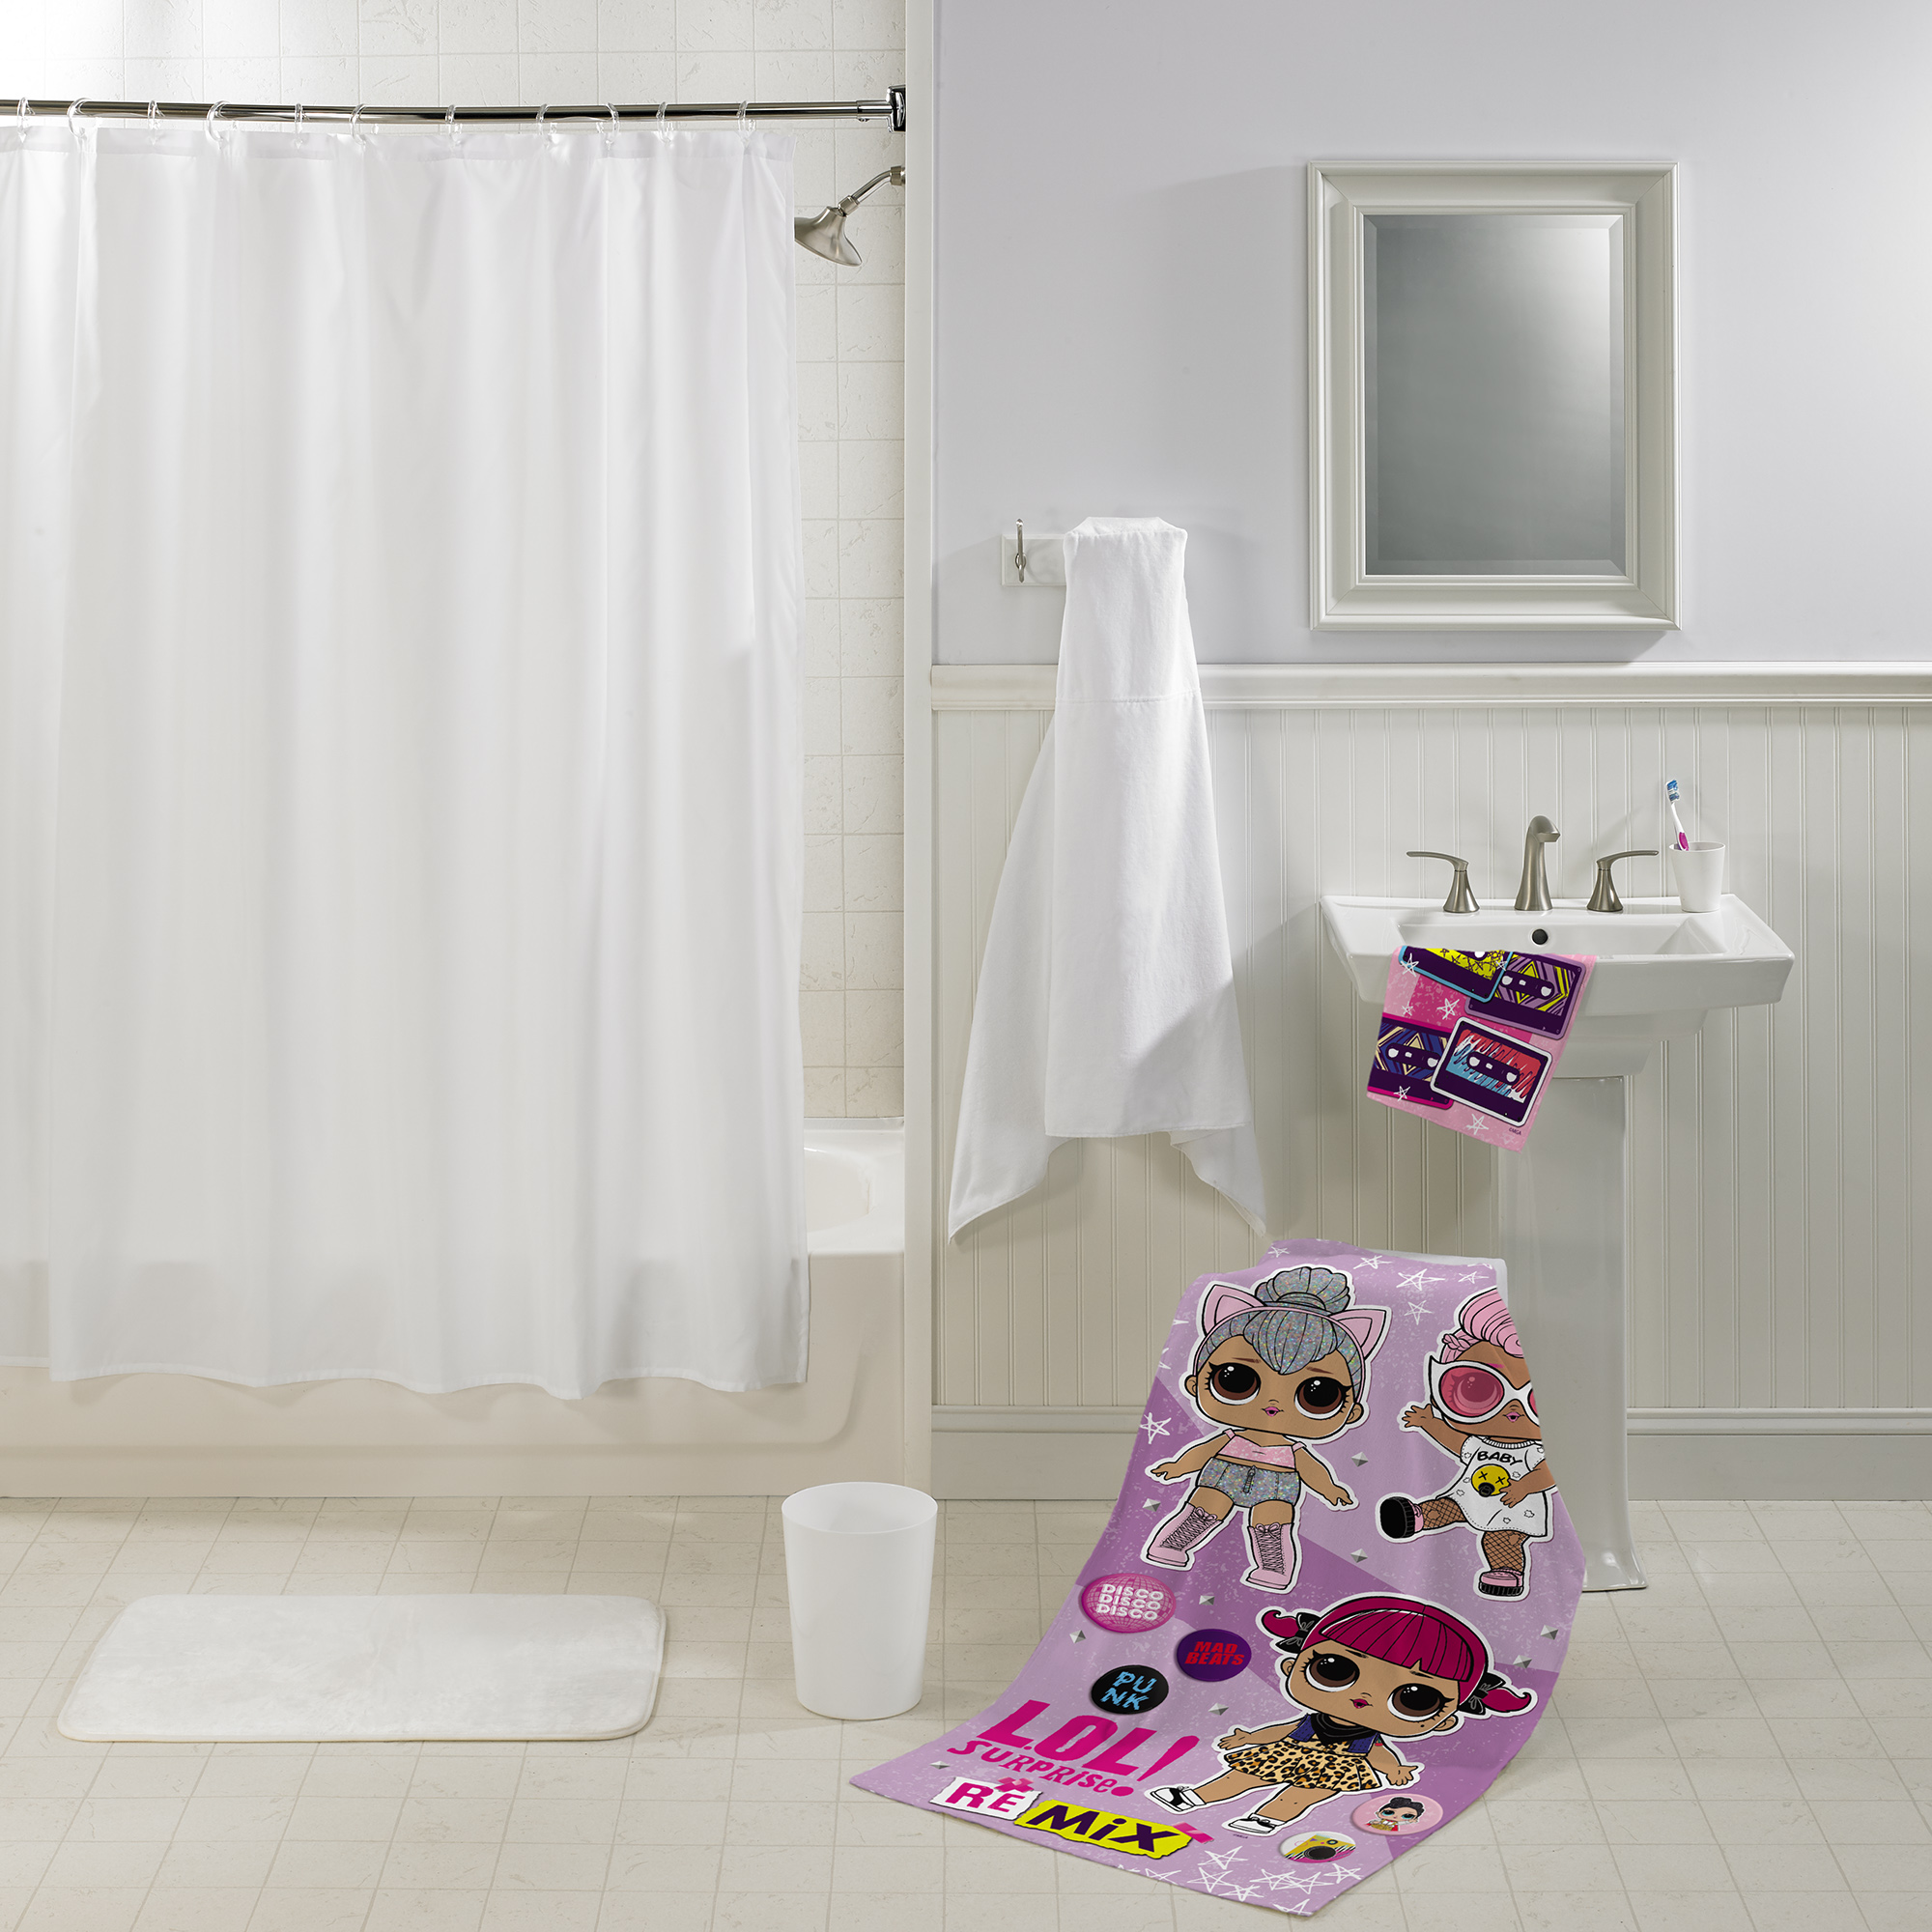 L.O.L Surprise! Kids Bath Towel and Wash Cloth, 2-Piece Set, Cotton, Purple. MGA - image 5 of 6